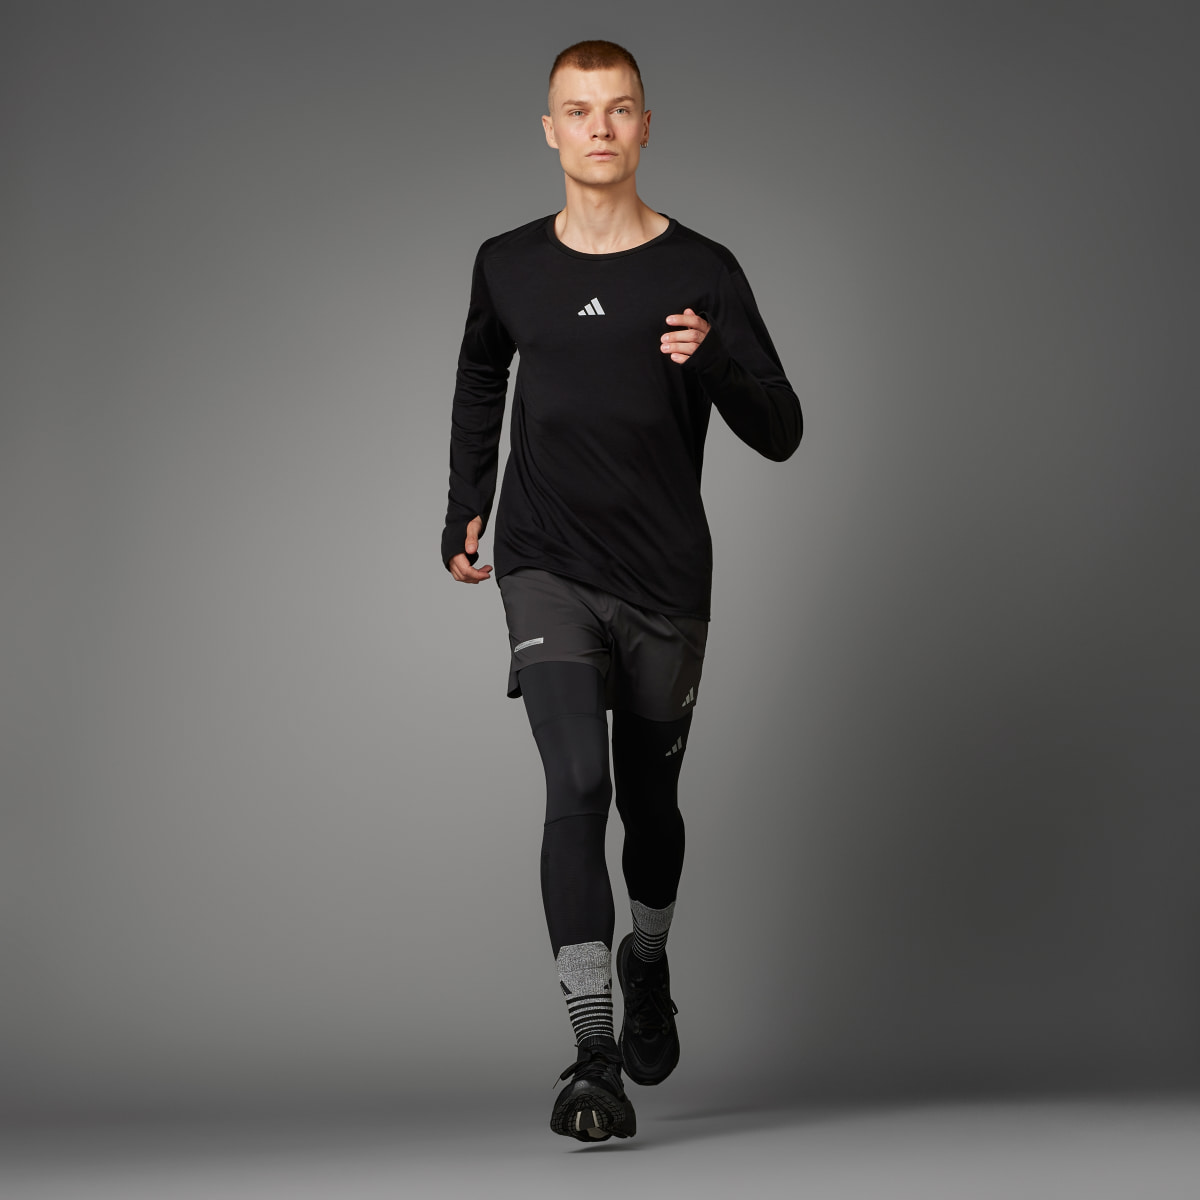 Adidas Ultimate Running Conquer the Elements Merino Uzun Kollu Üst. 10